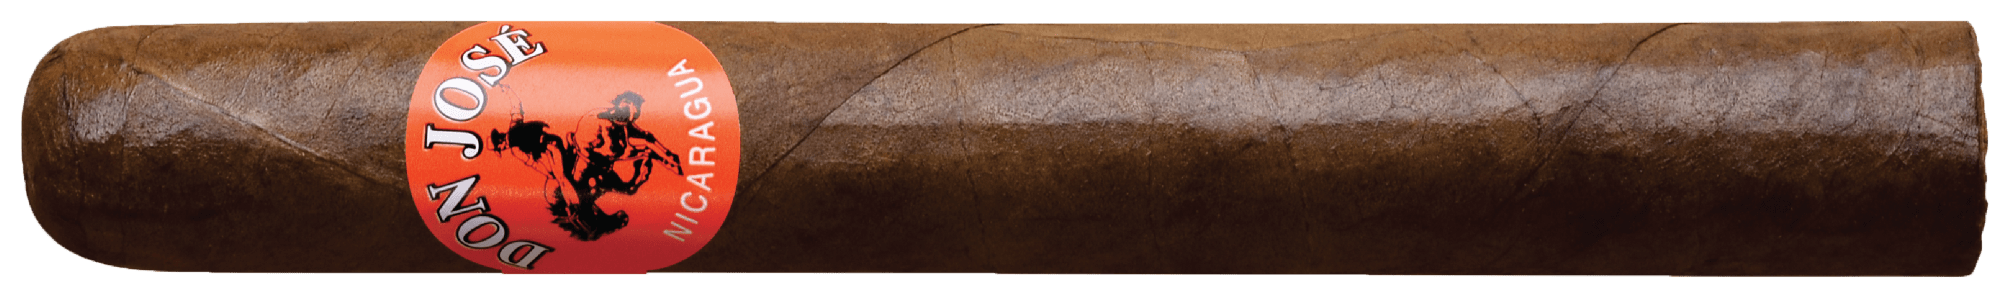 J.C. Newman Cigars Don Jose Turbo Cigar